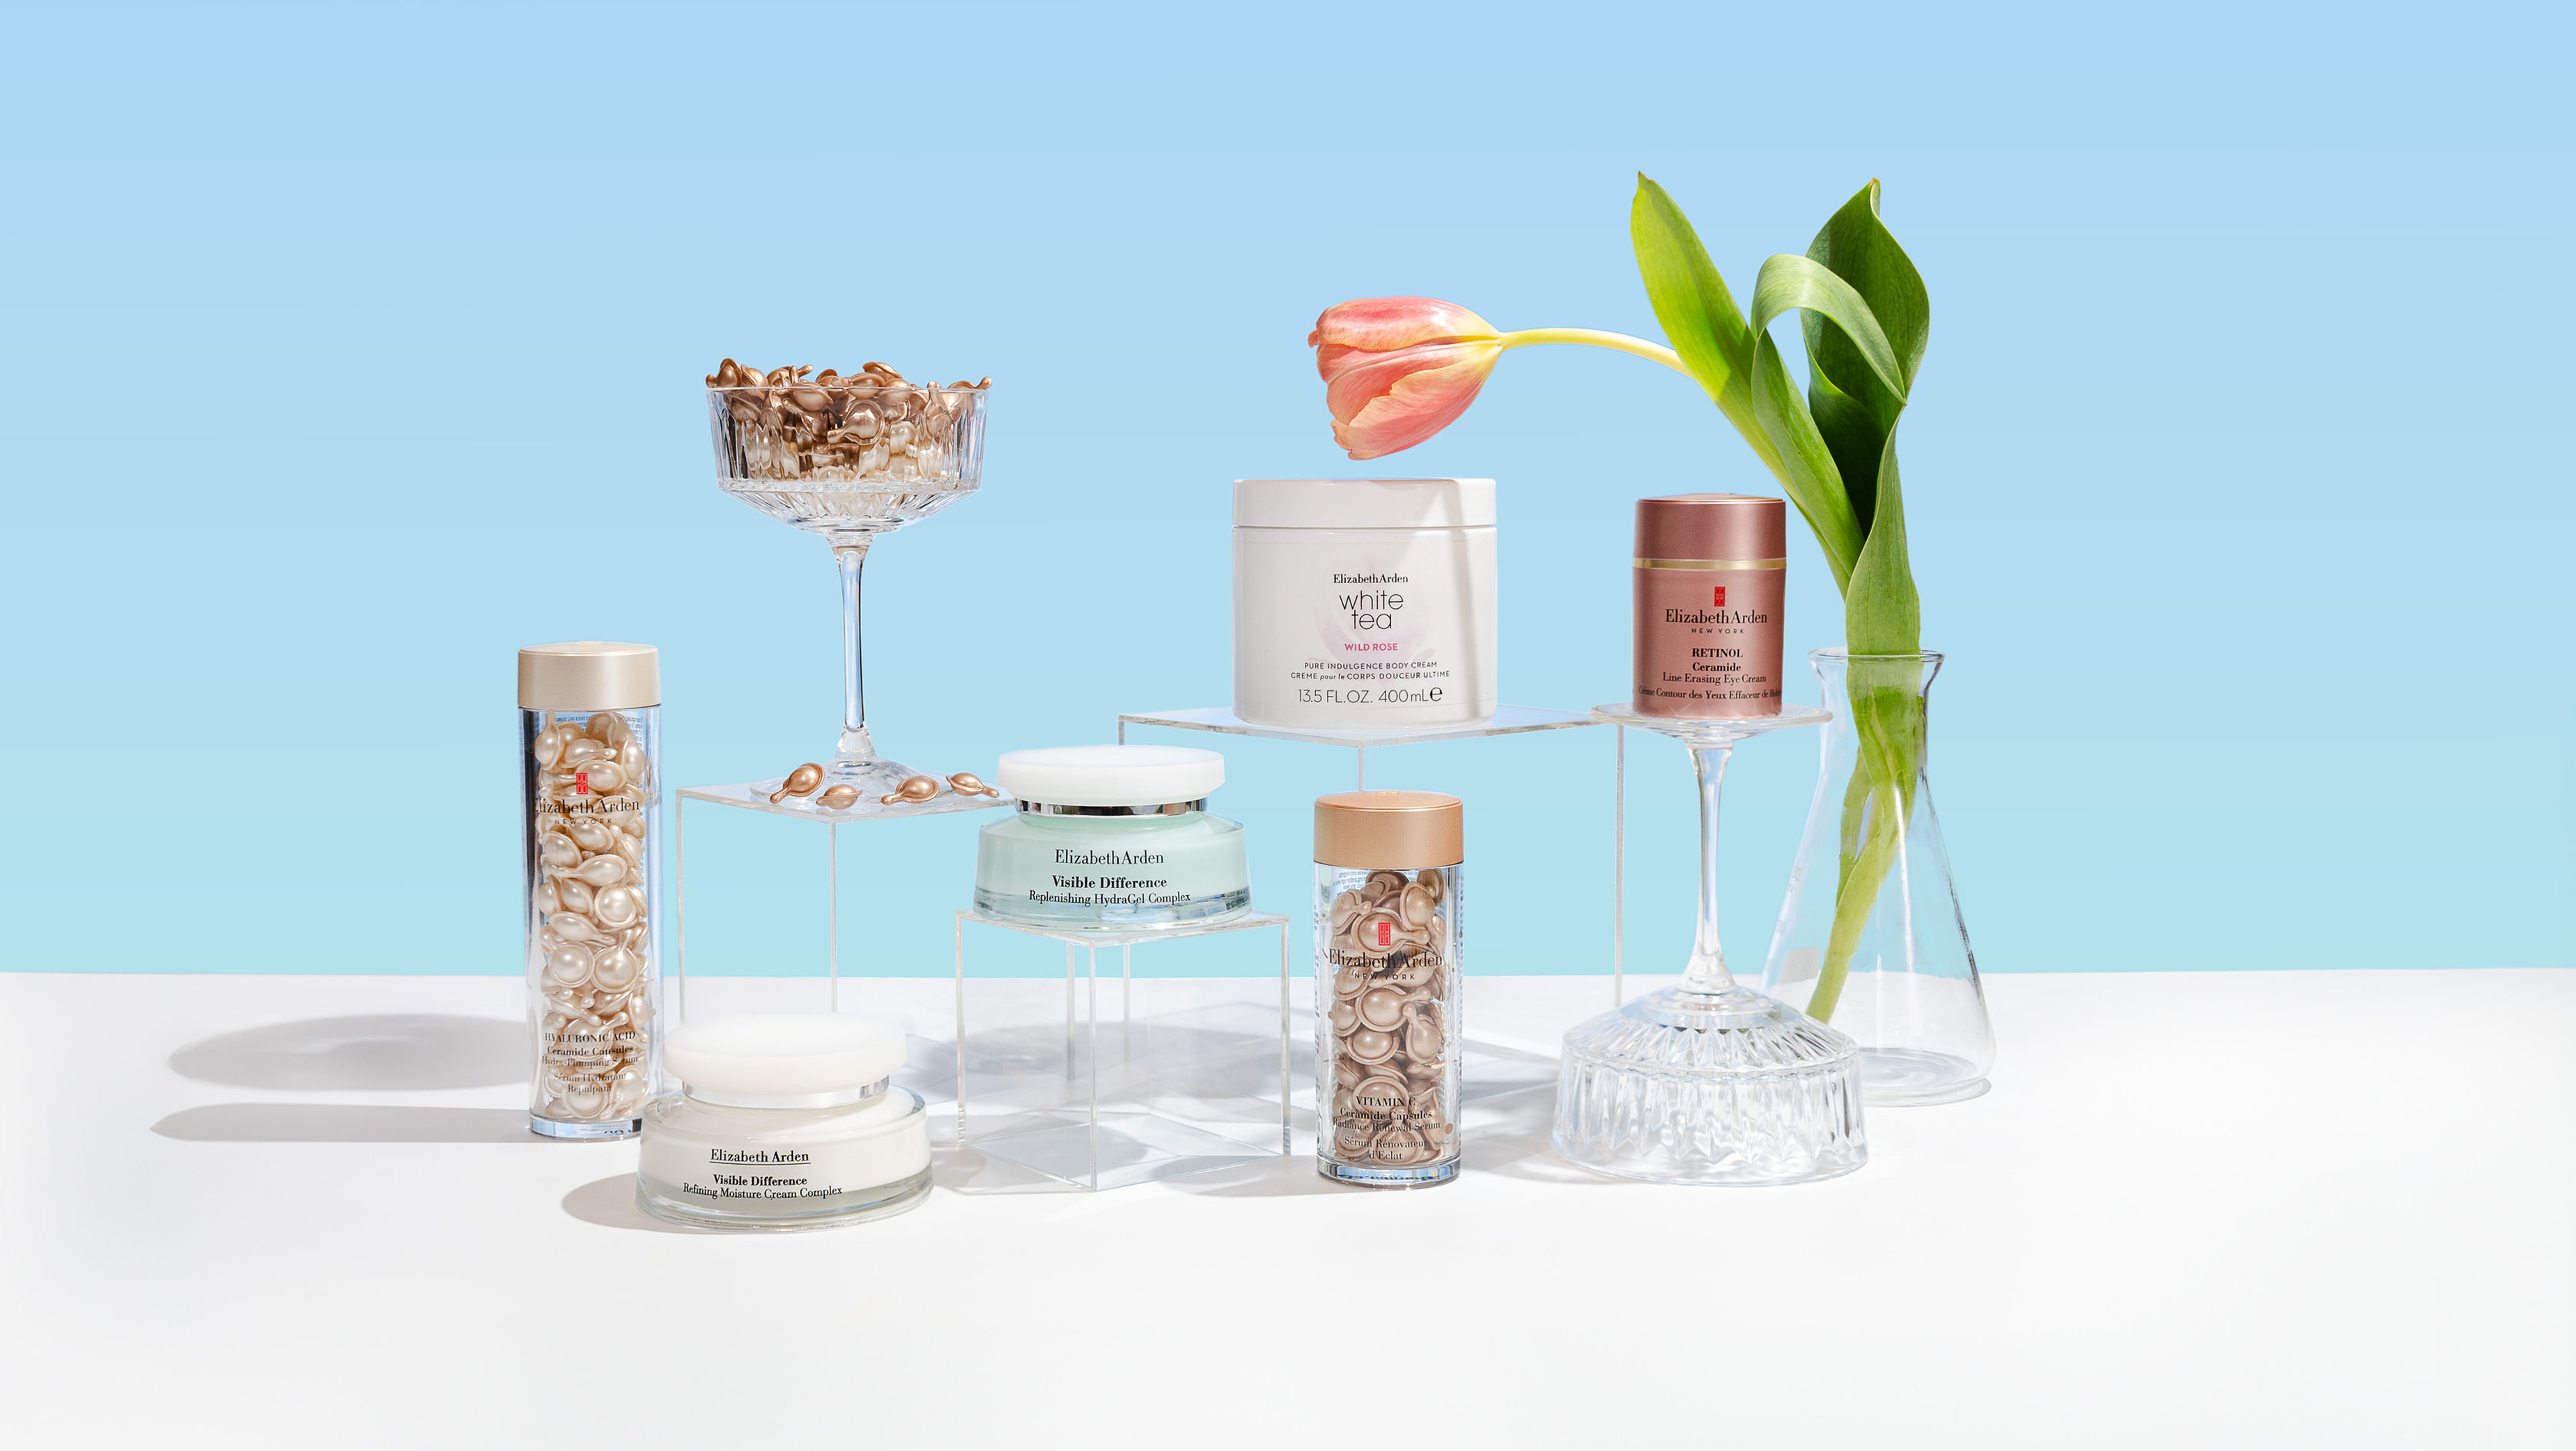 Elizabeth Arden Skin Care products